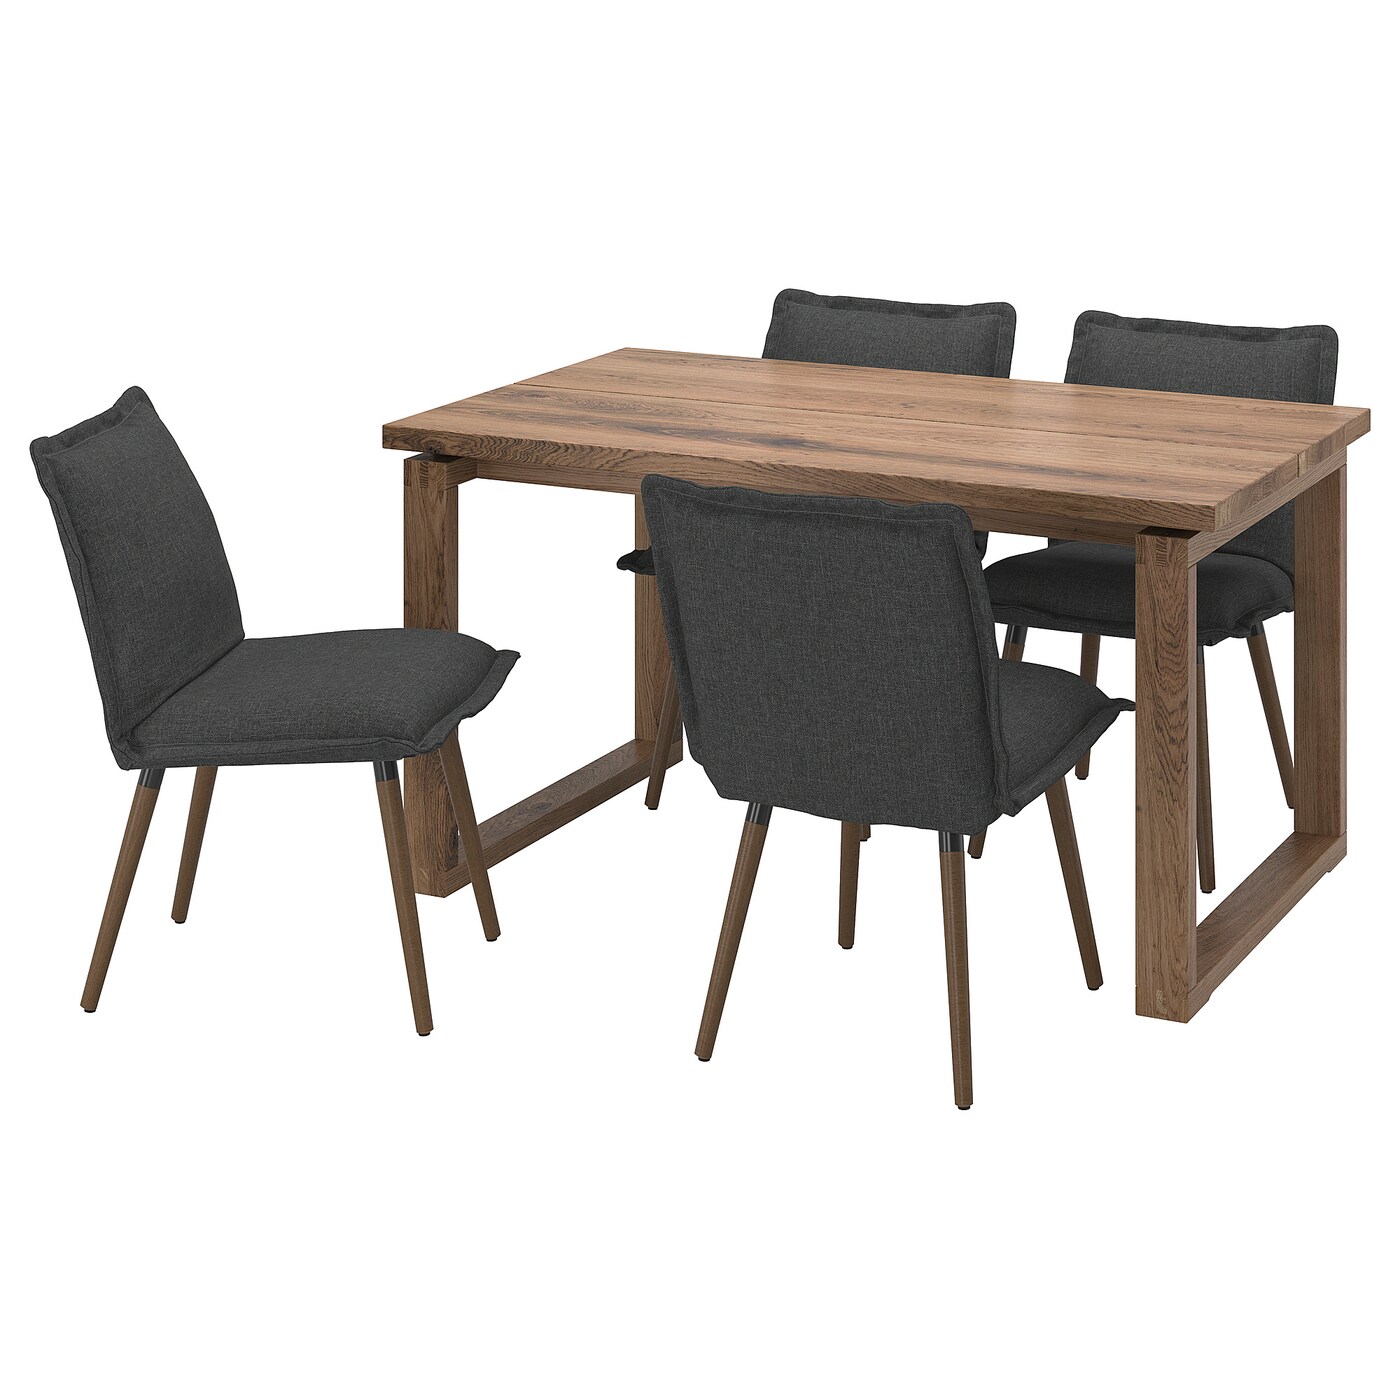 Стол и 4 стула - MÖRBYLÅNGA / KLINTEN/ MОRBYLАNGA IKEA/  МЁРБИЛОНГА / КЛИНТЕН ИКЕА,  10х85 см,  коричневый/ темно-серый